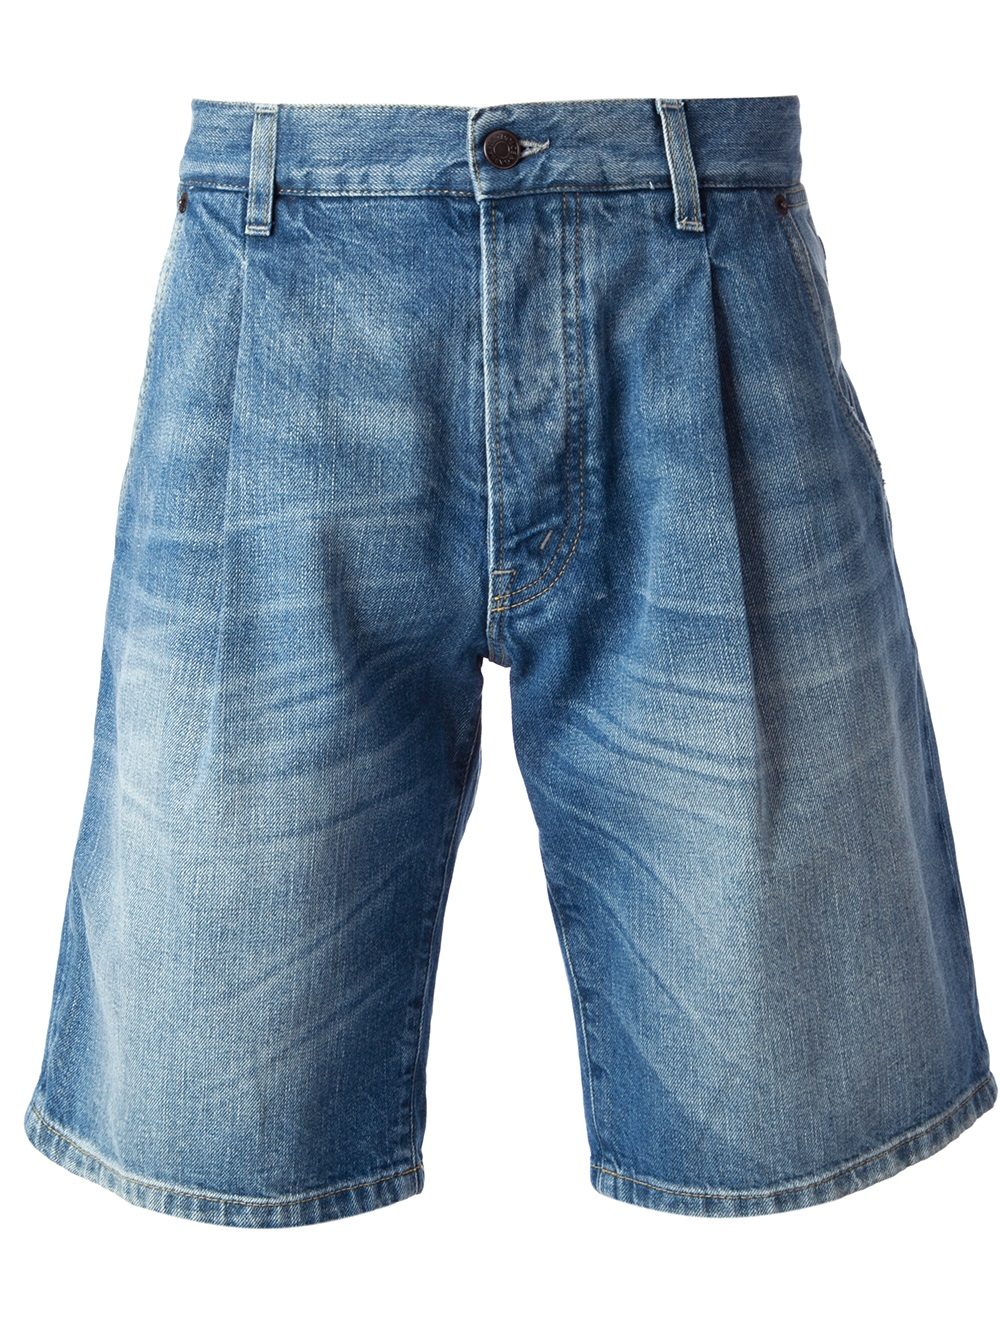 Dolce & Gabbana Pleated Denim Shorts in Blue for Men - Lyst